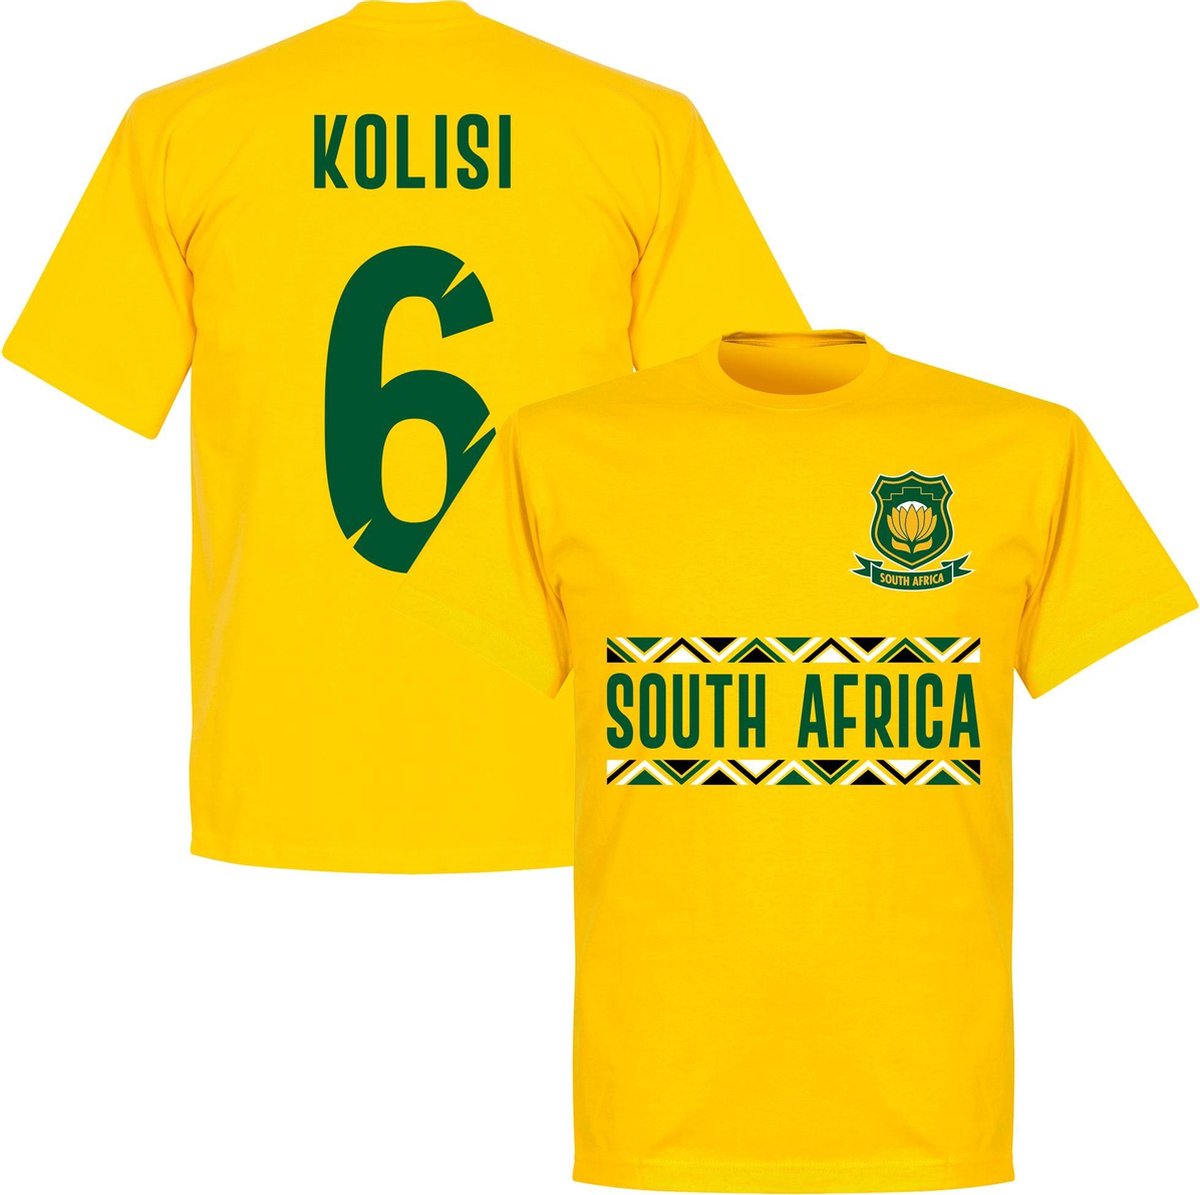 Zuid Afrika Kolisi 6 Rugby Team T-Shirt - Geel - XS